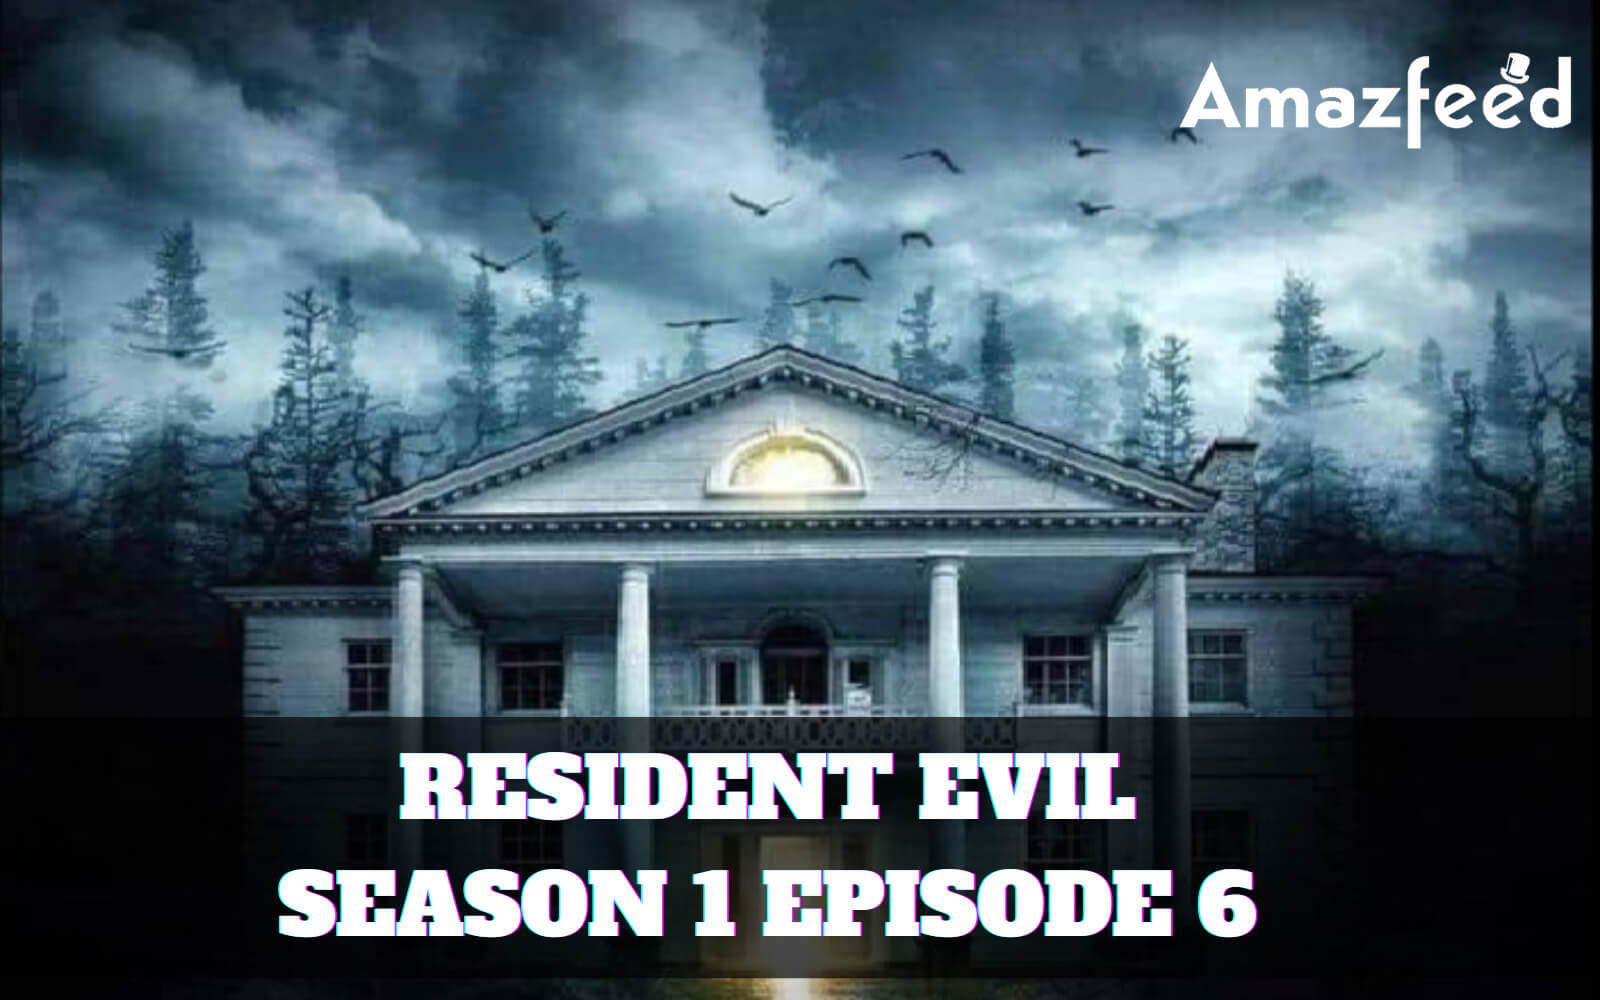 Resident Evil Season 1 episode 6 release date